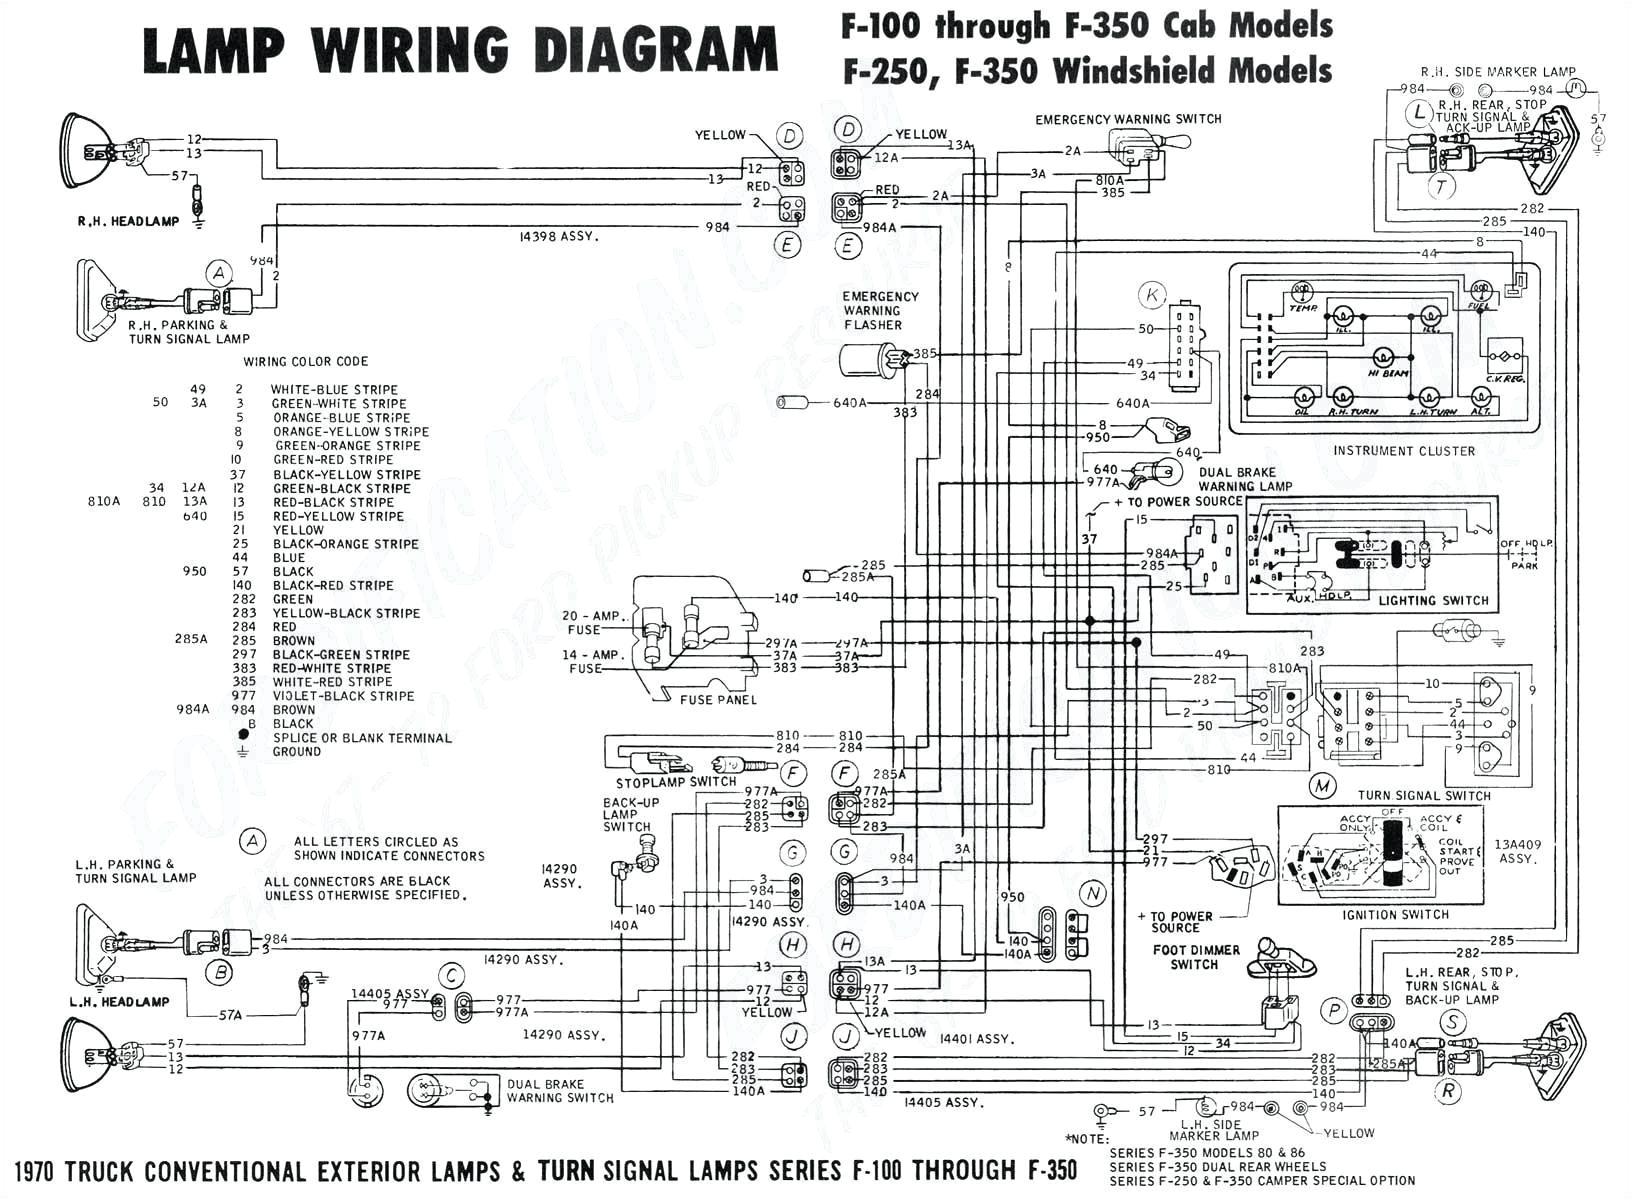 Jet Boat Wiring Diagram Dod Wiring Diagram Schema Diagram Database